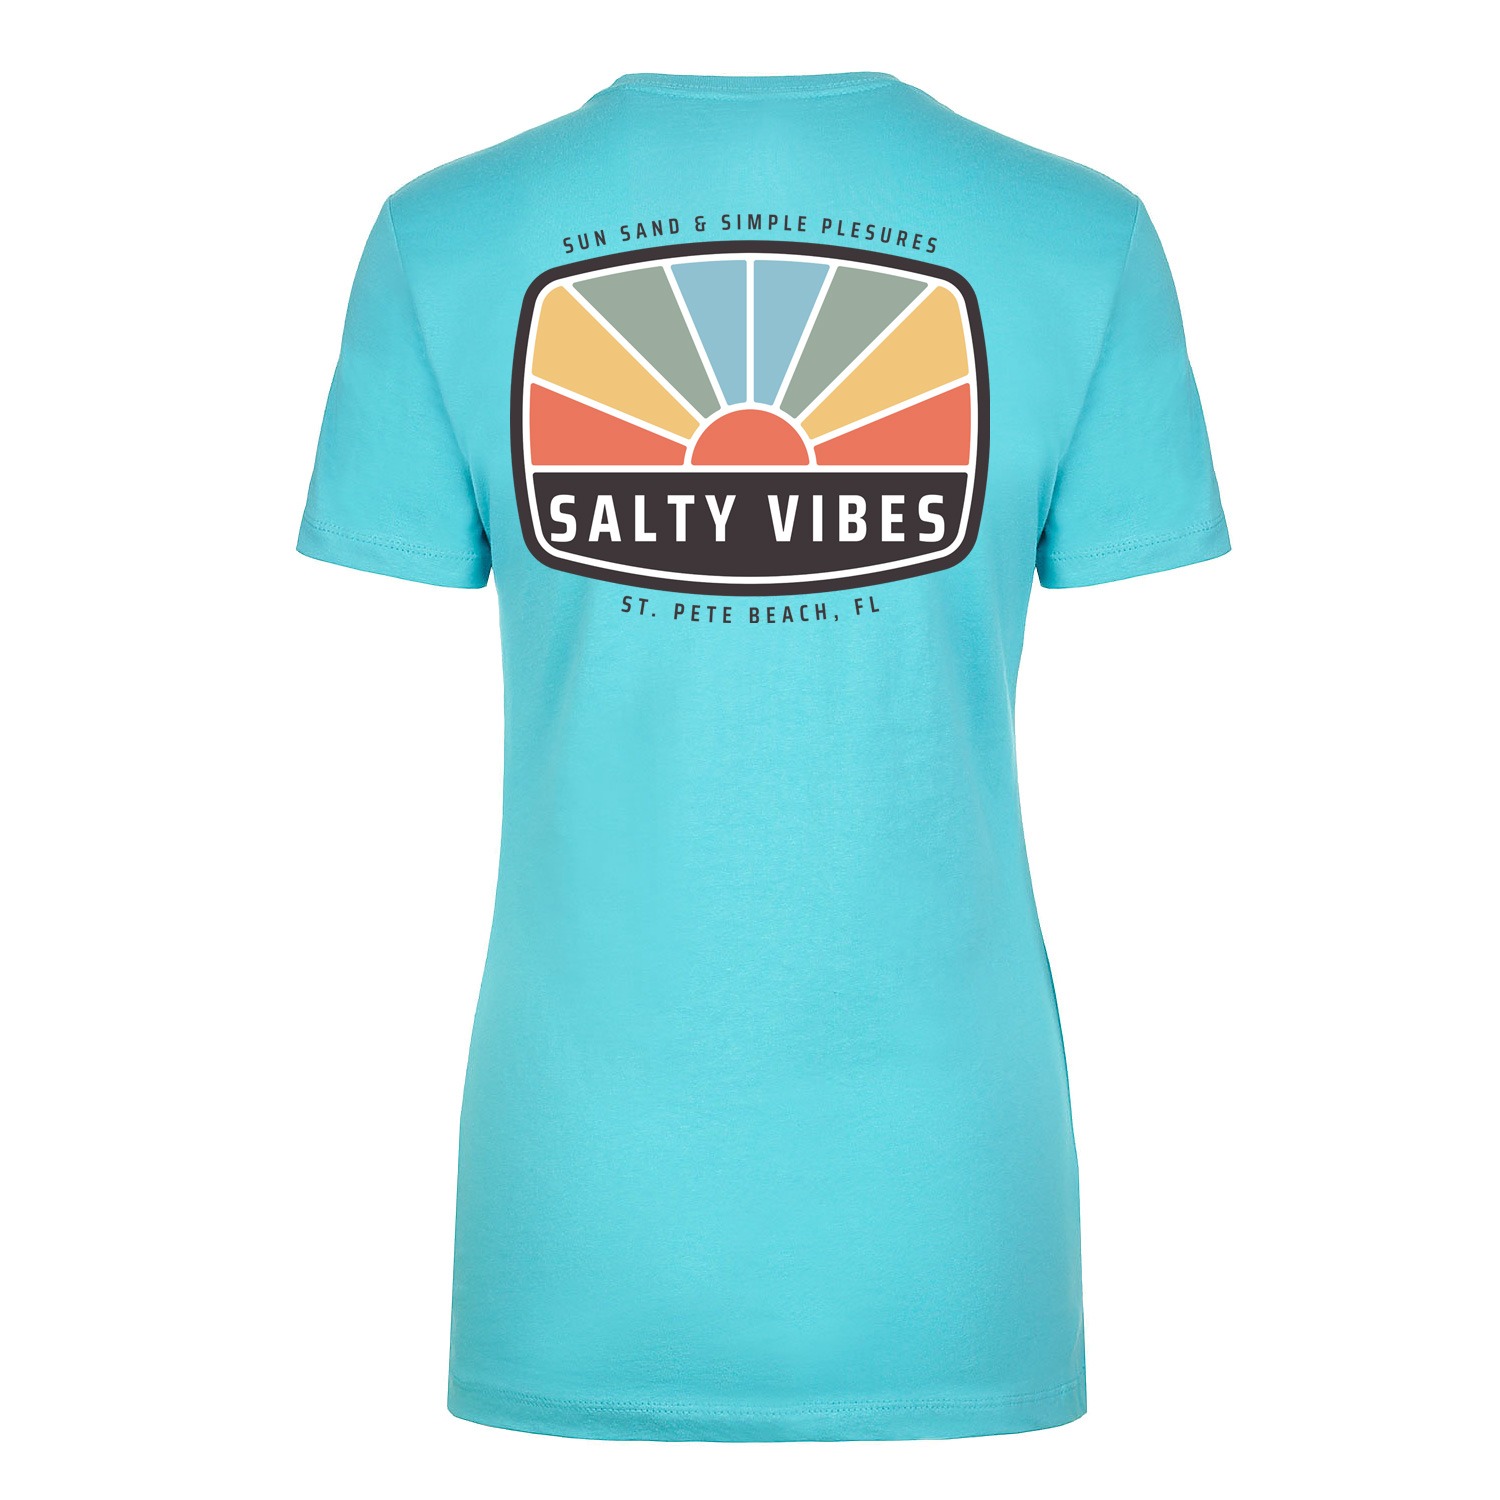 Salty Vibes Sunburst Women's Fitted T-shirt - Tahiti Blue, 2XL